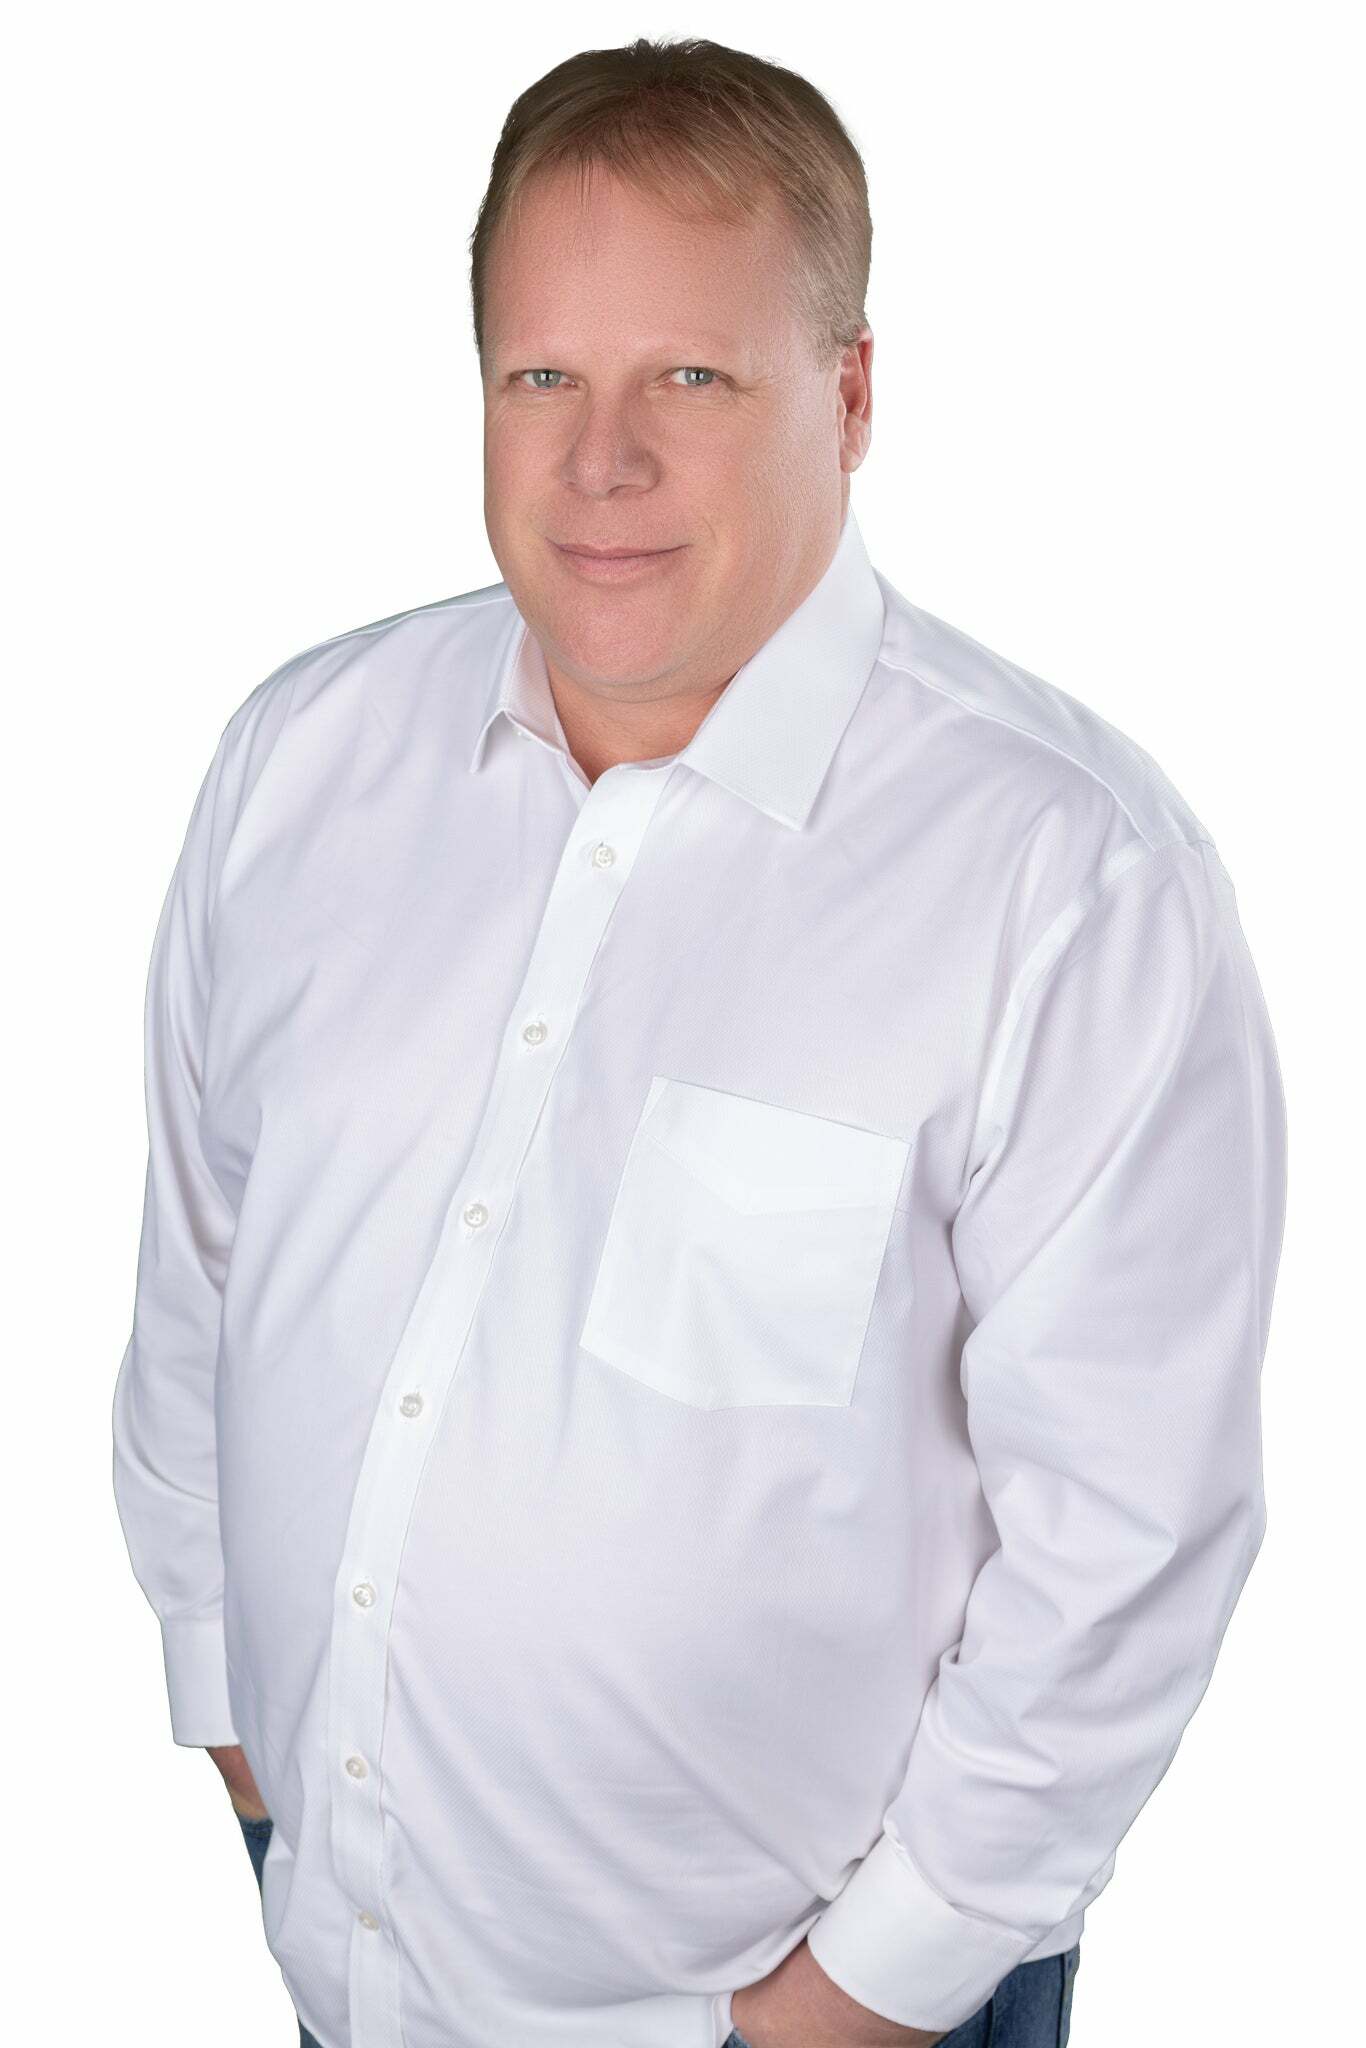 Scott Parrott, Real Estate Salesperson in Murrieta, Associated Brokers Realty